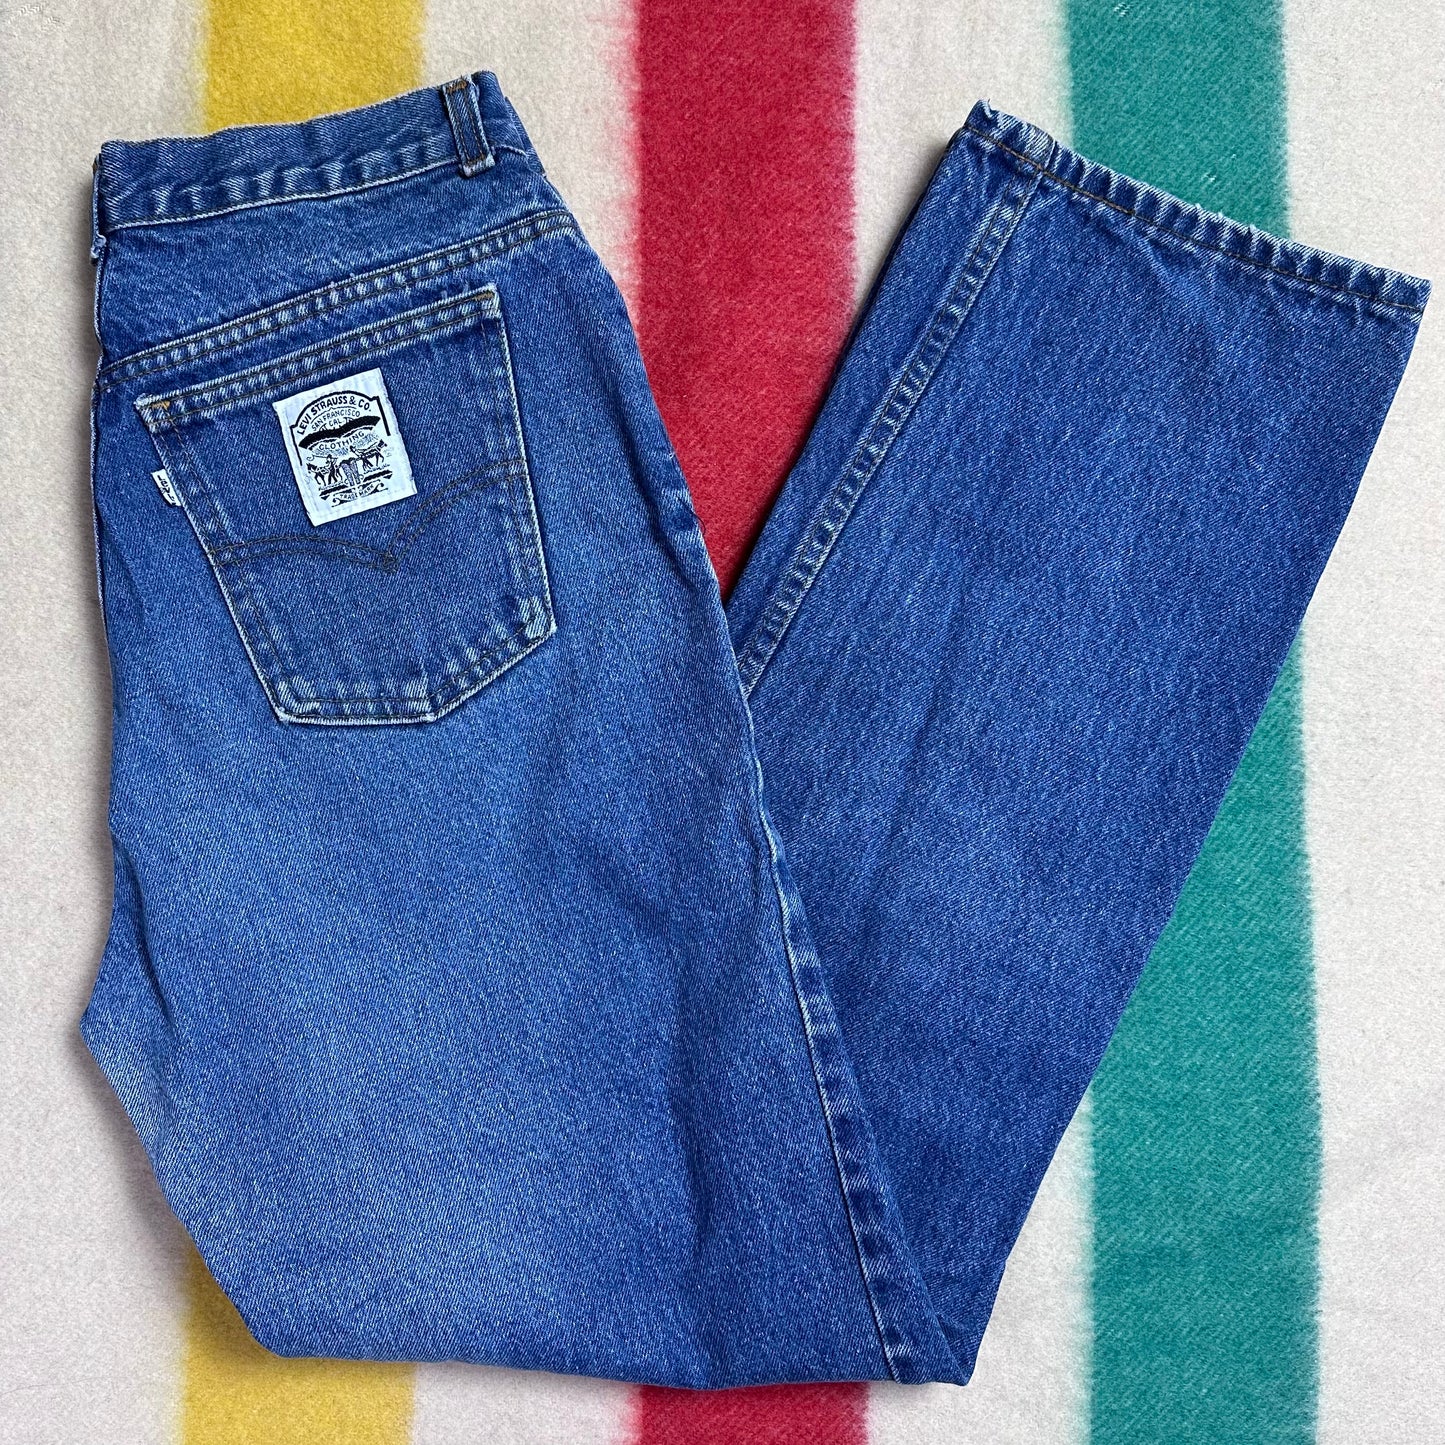 1970s/1980s Levi’s Jeans, 30"x31.5", White Patch